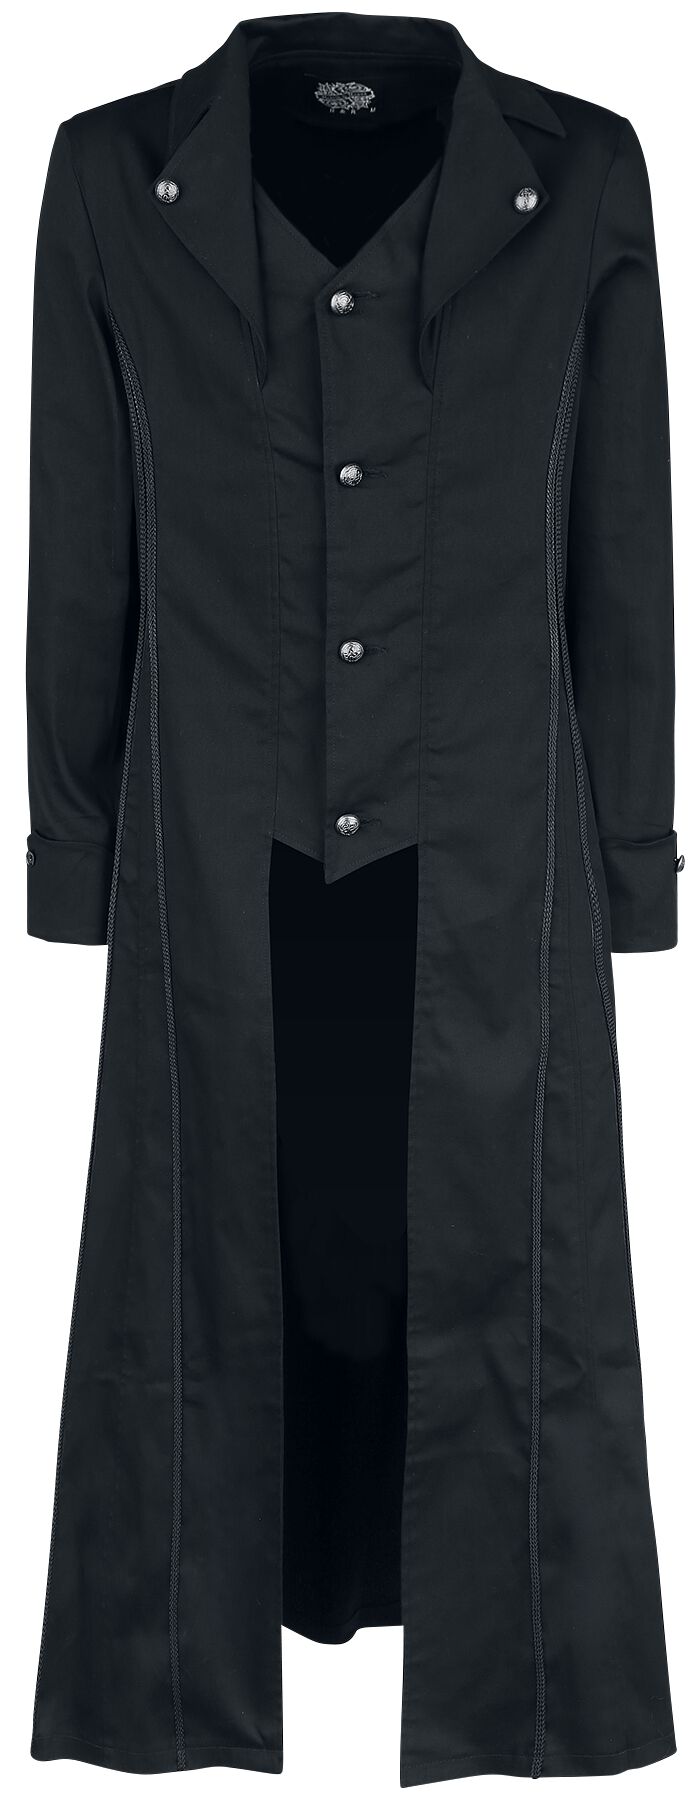 H&R London Black Classic Coat Militärmantel schwarz in M